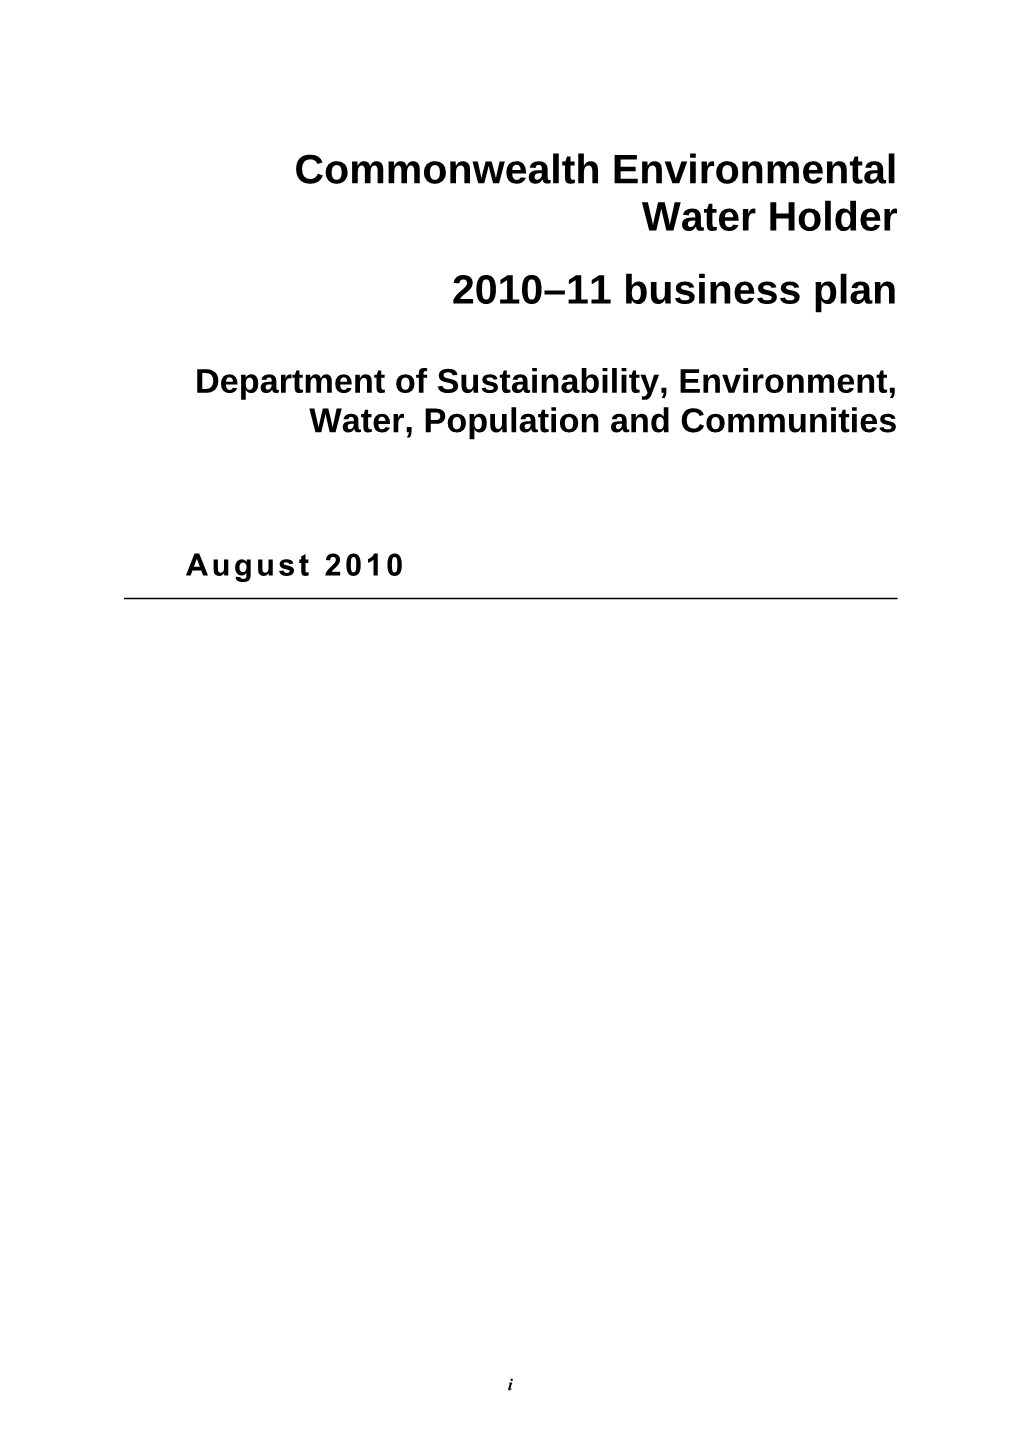 Commonwealth Environmental Water Holder 2010-2011 Business Plan